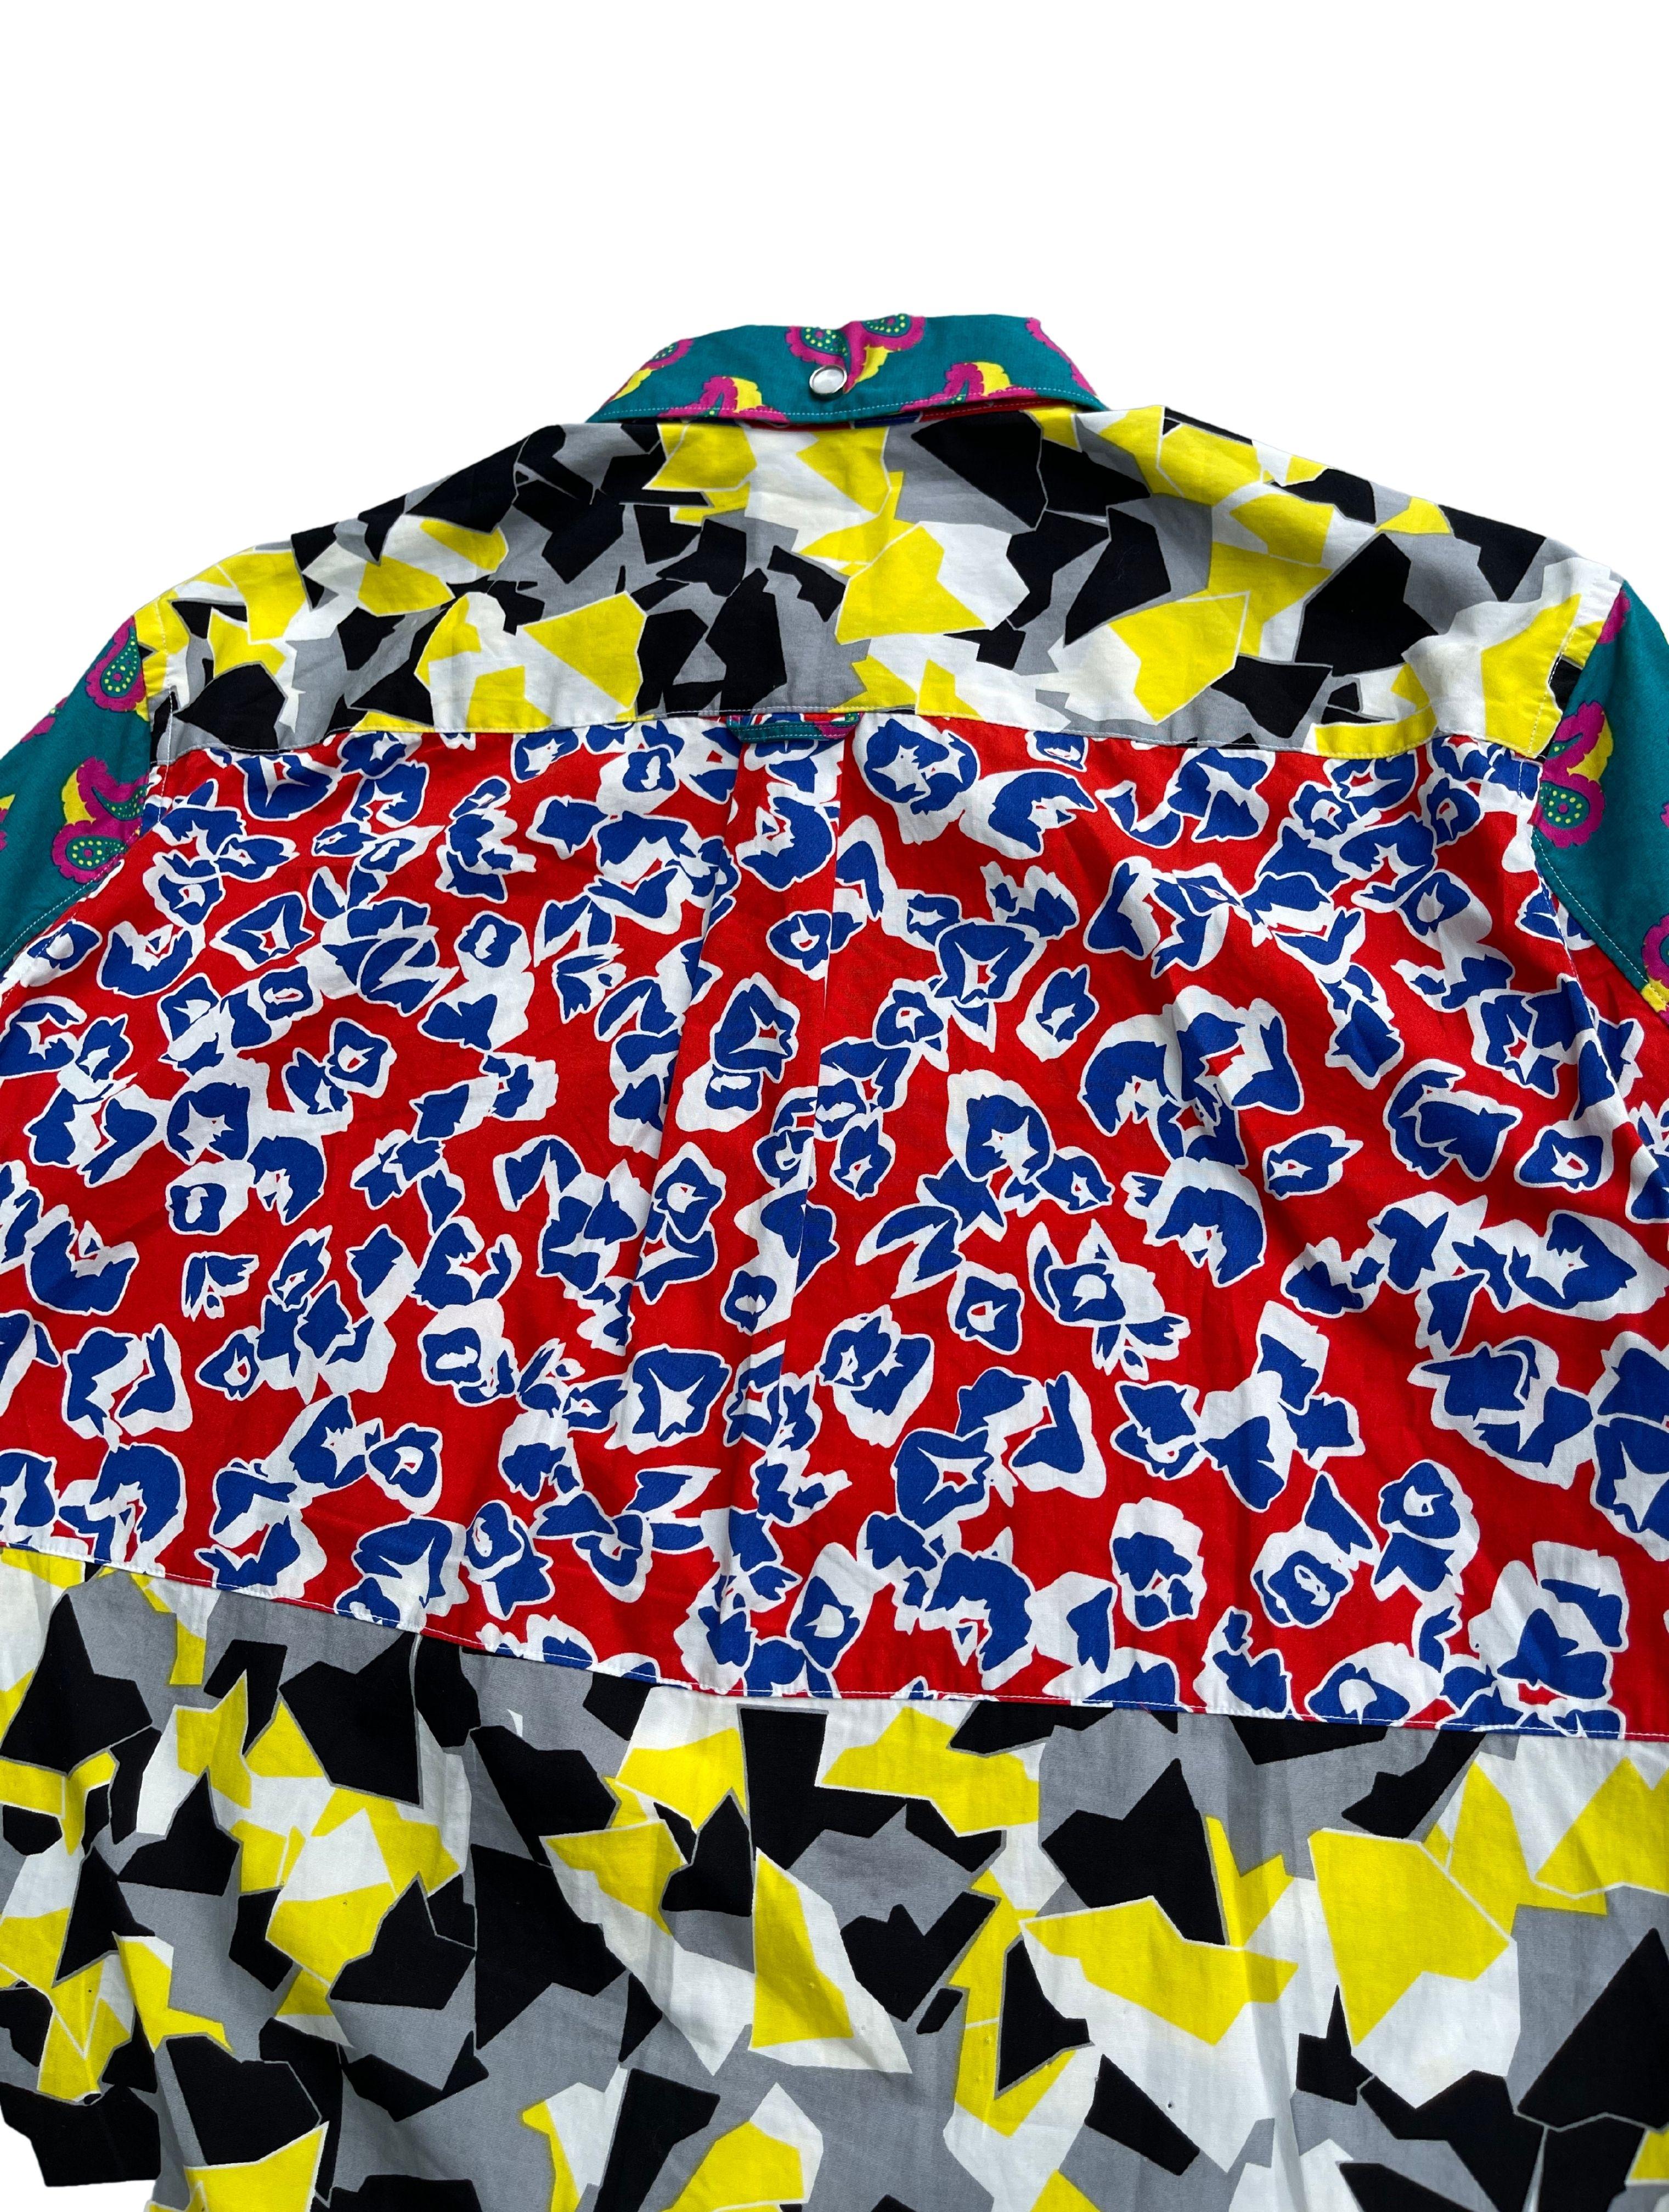 Women's or Men's Ganryu Pattern Clashing Uneven Shirt, Spring Summer 2012 For Sale